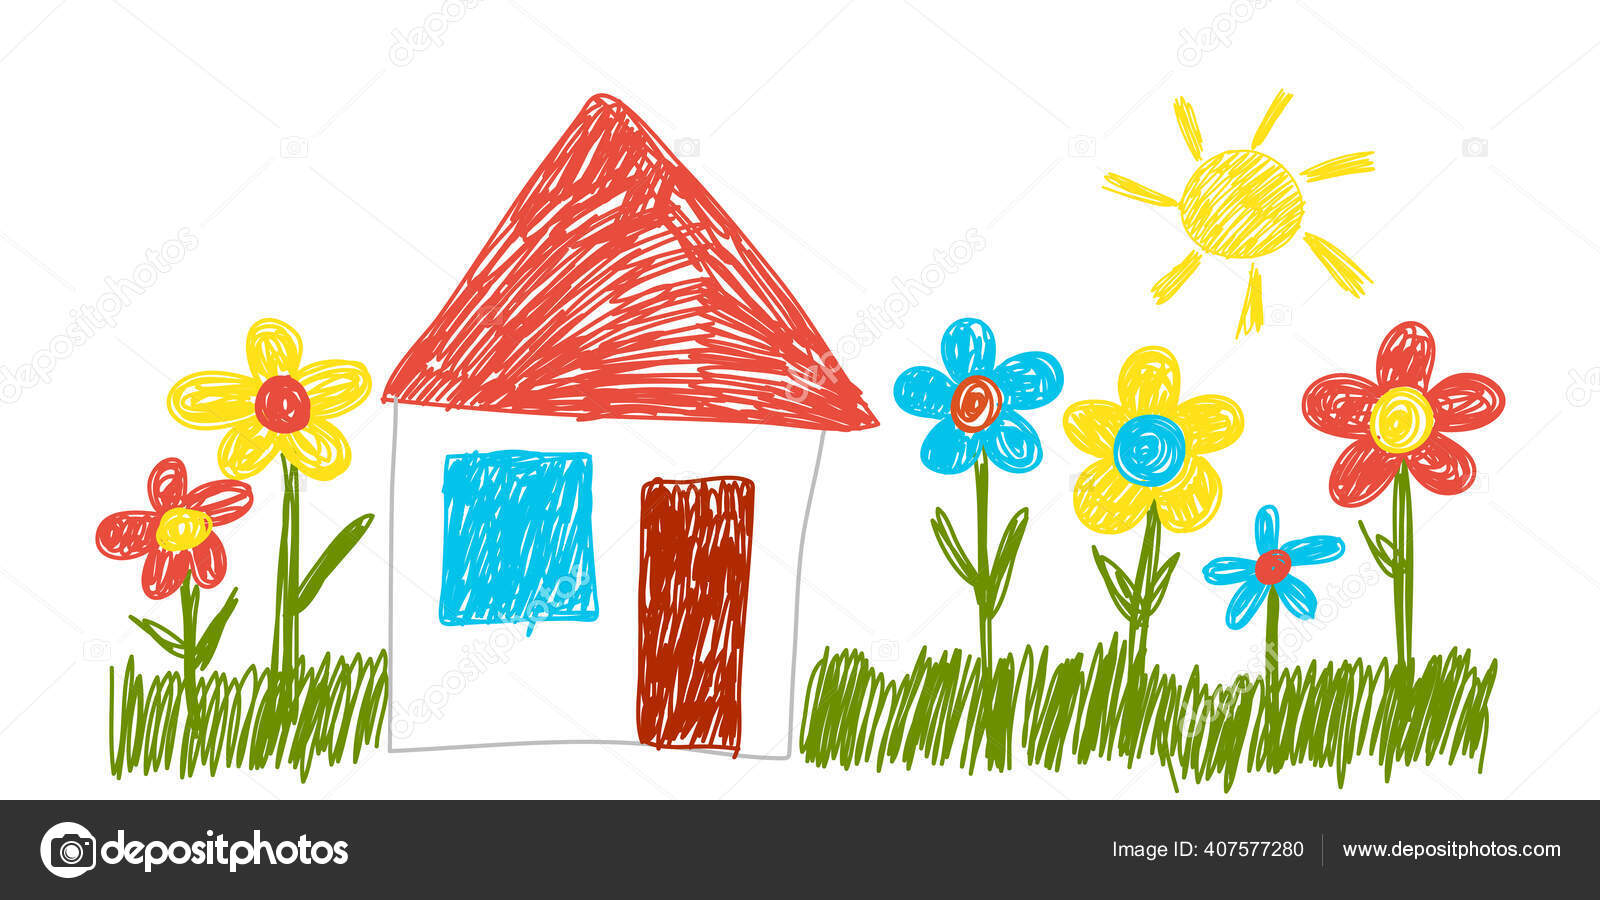 House Drawing | How To Draw House | Smart Kids Art - YouTube-saigonsouth.com.vn